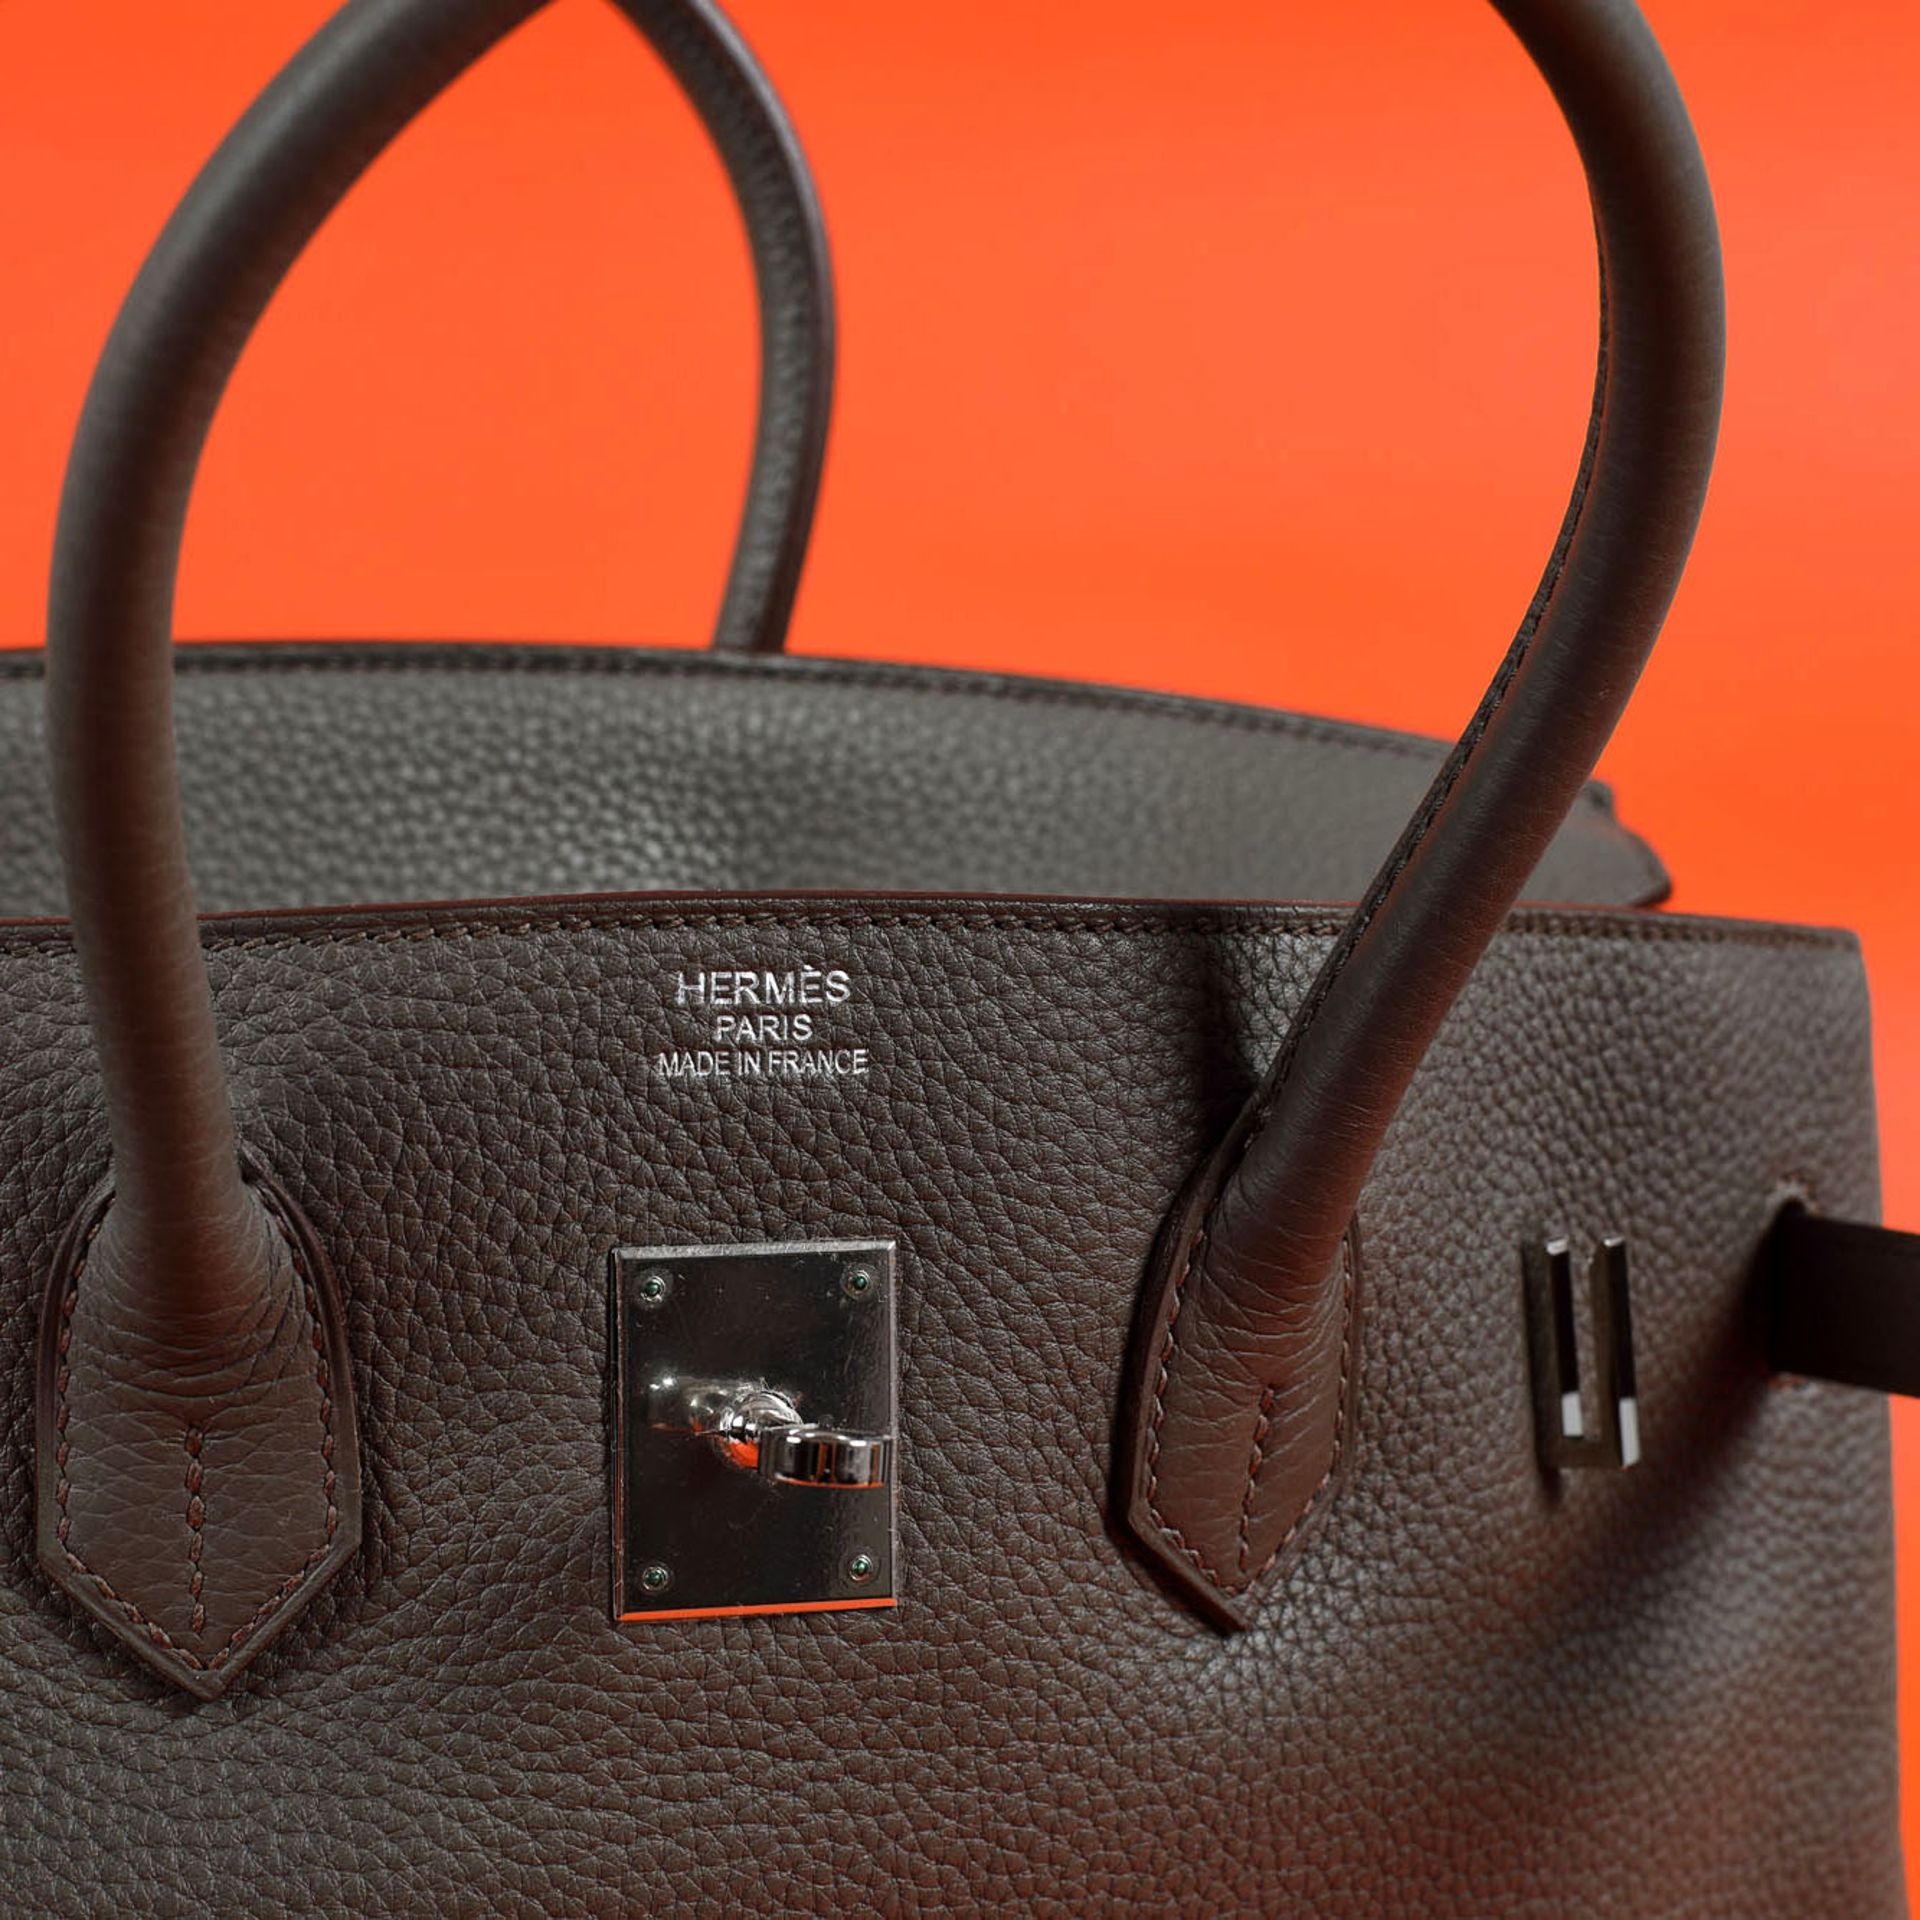 "Birkin 35" - Hermès bag, Clemence leather, colour Etain, for women, accompanied by original box - Image 8 of 8